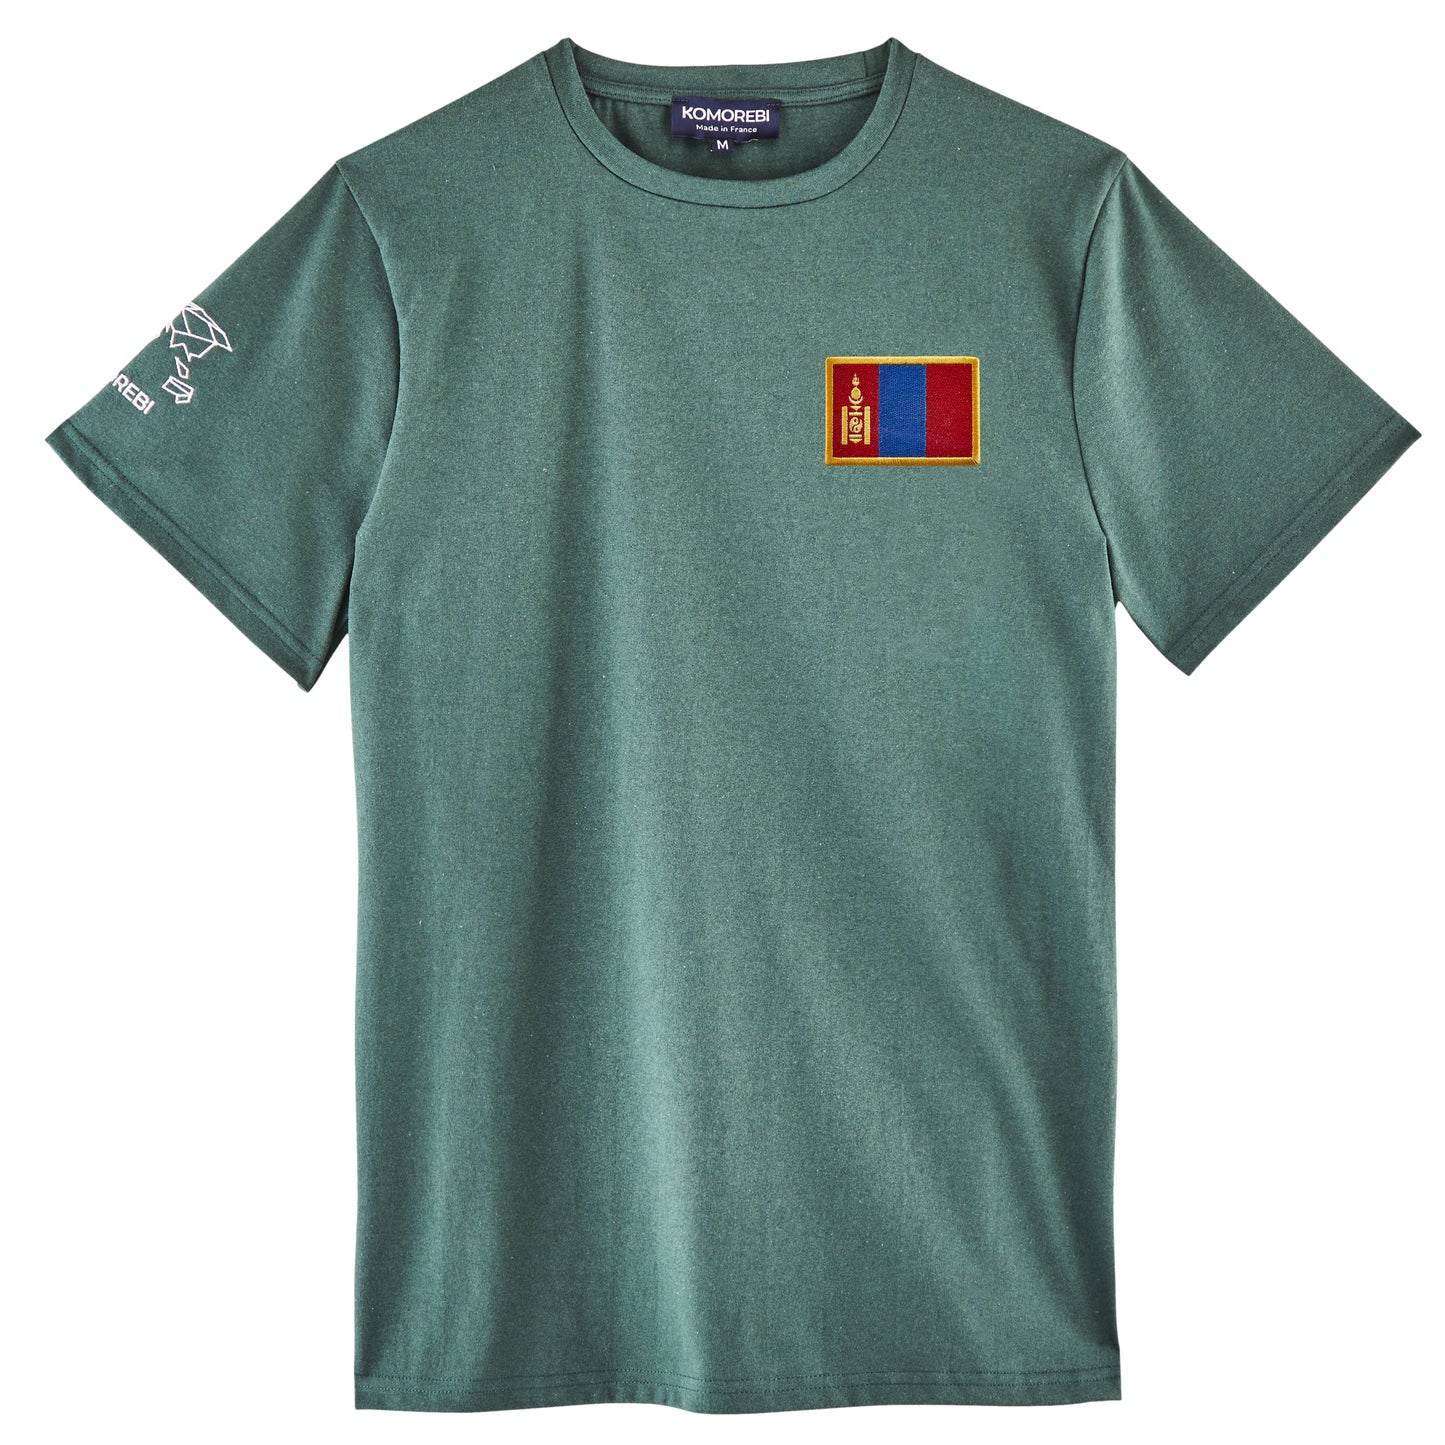 Mongolia • T-shirt